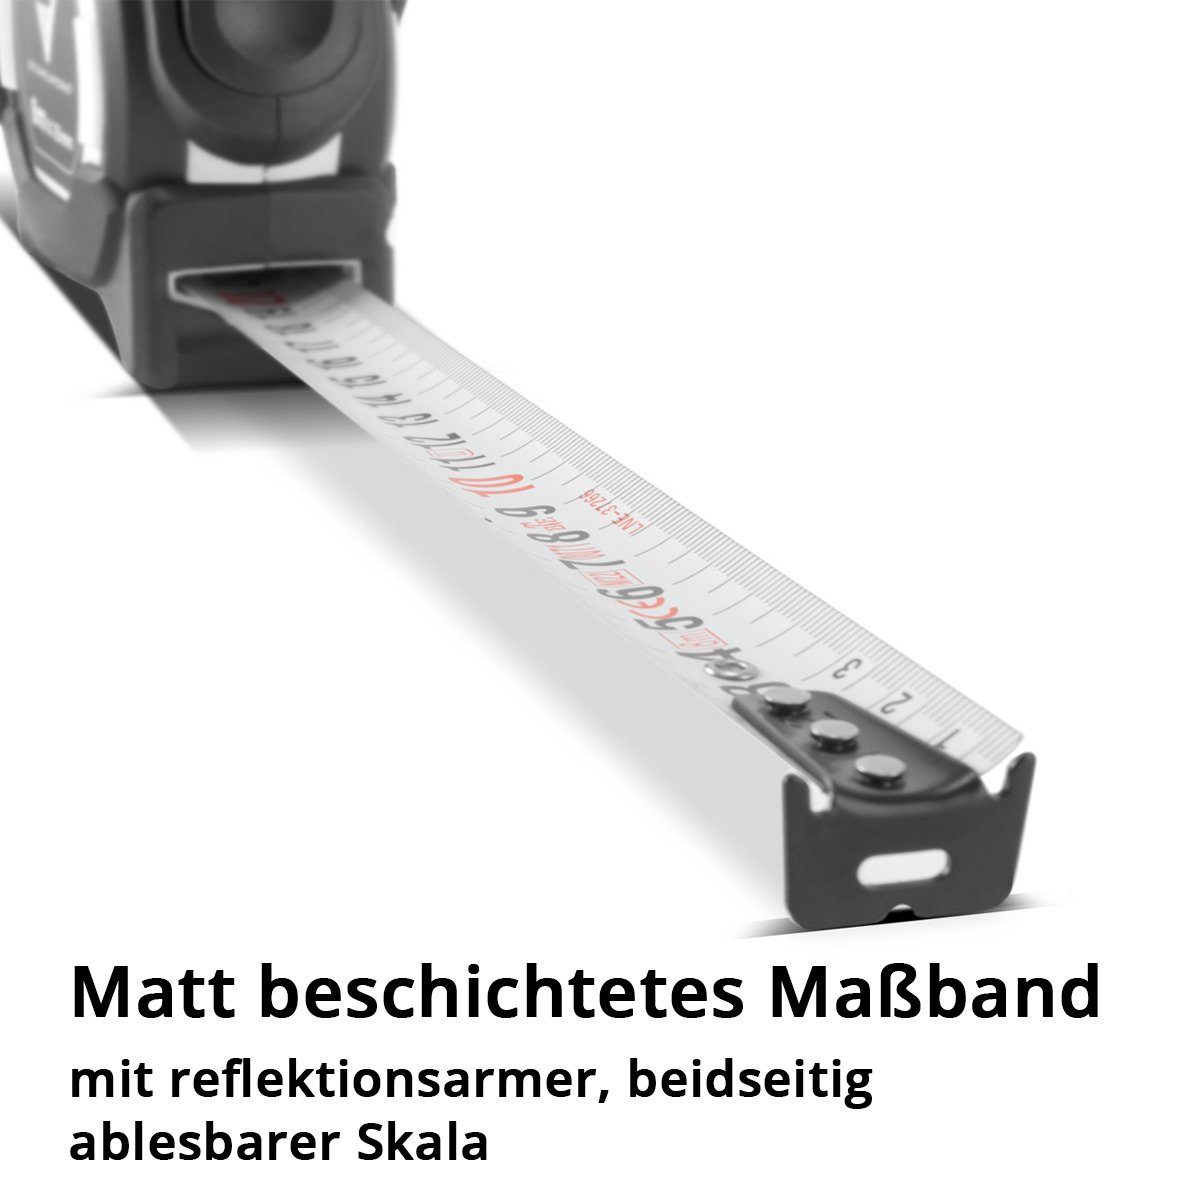 STAHLWERK Maßband Bandmaß / Maßband, Gürtelclip 3 mit Messband Meter